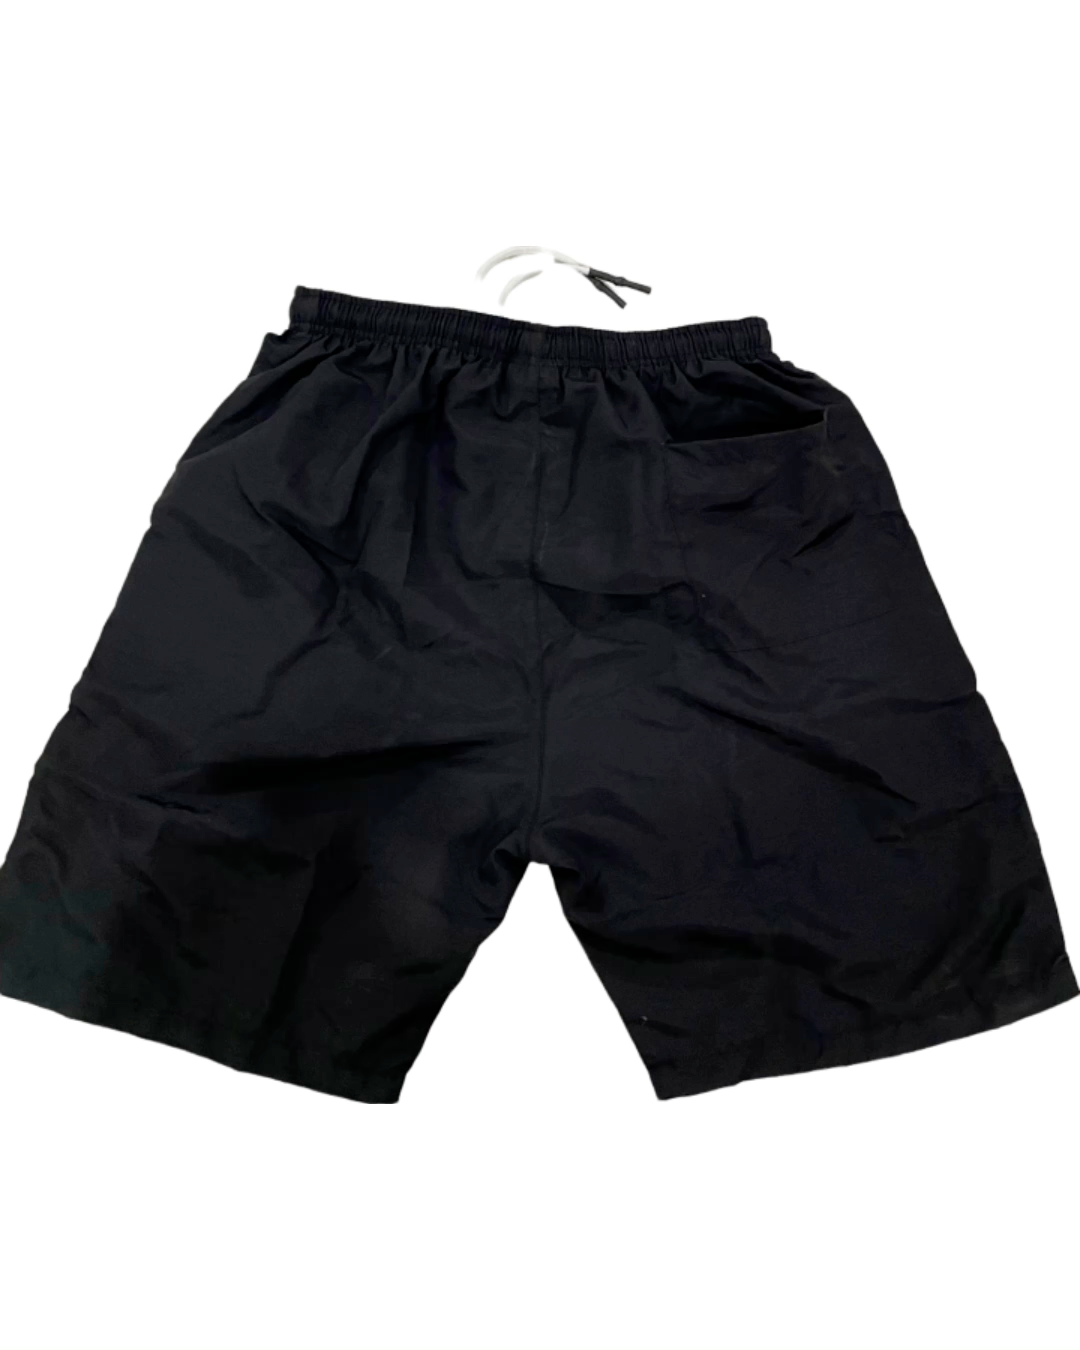 Nununu - Nylon Basketball Shorts Black - Cool shorts for kids